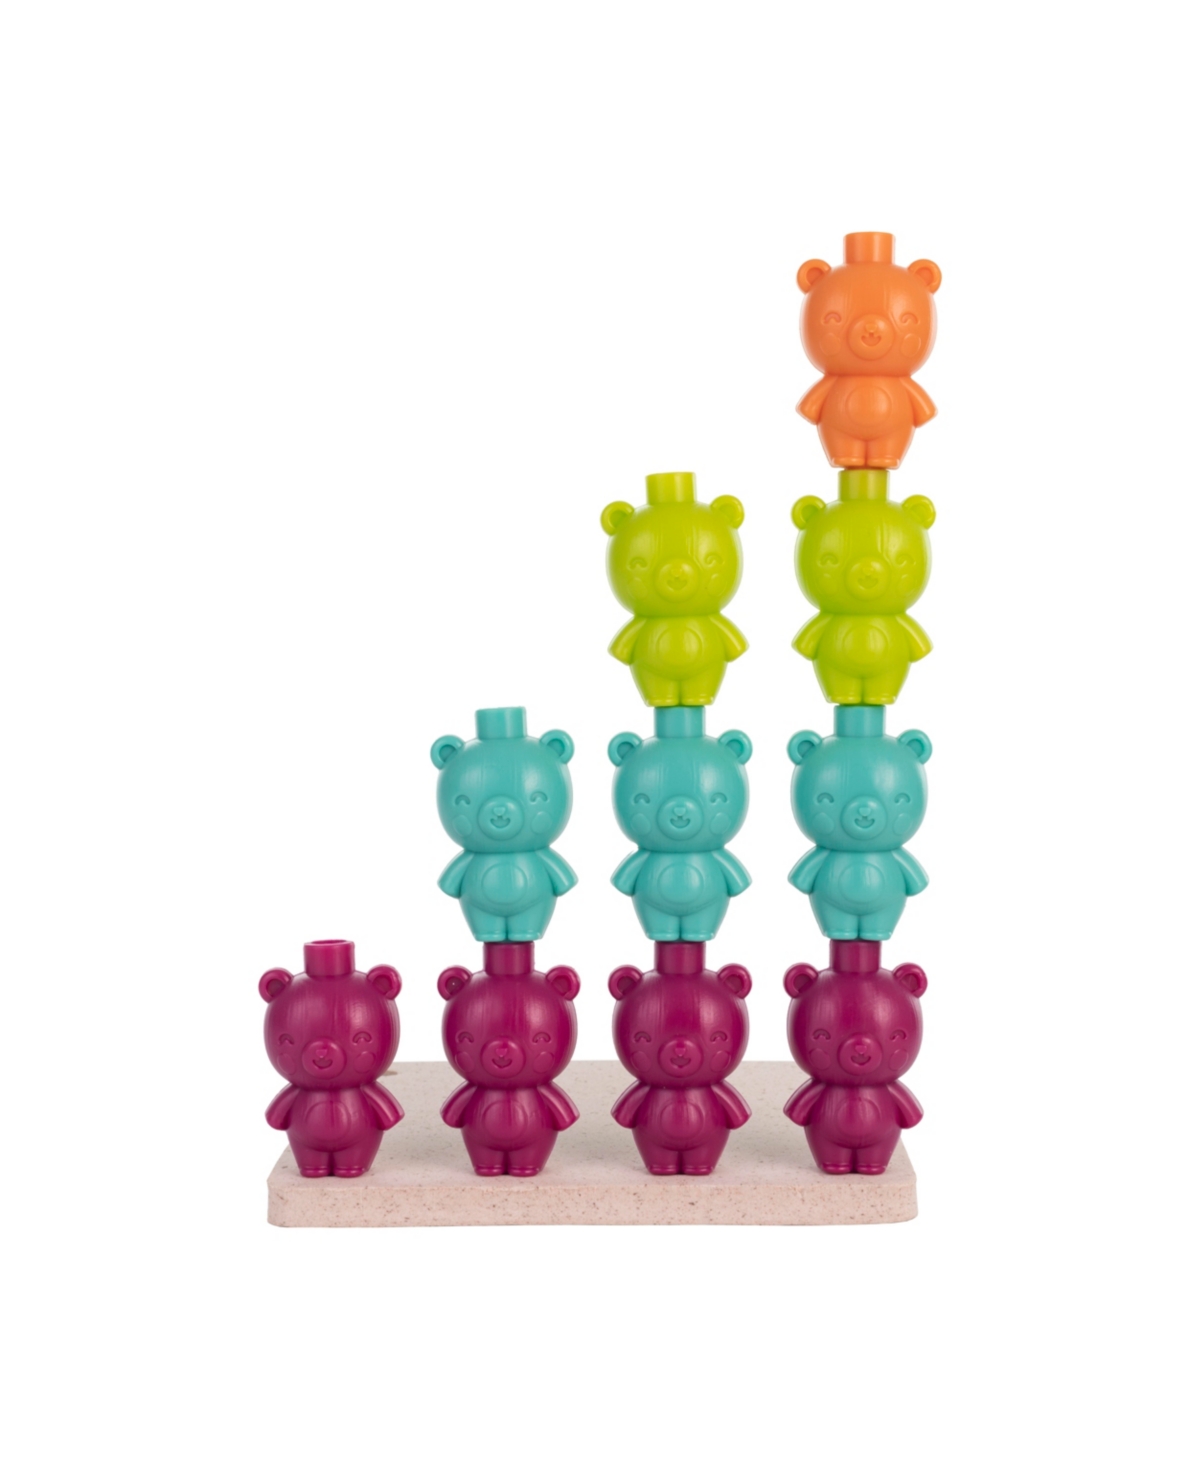 Shop Miniland Math Connectable Bears In Multicolor